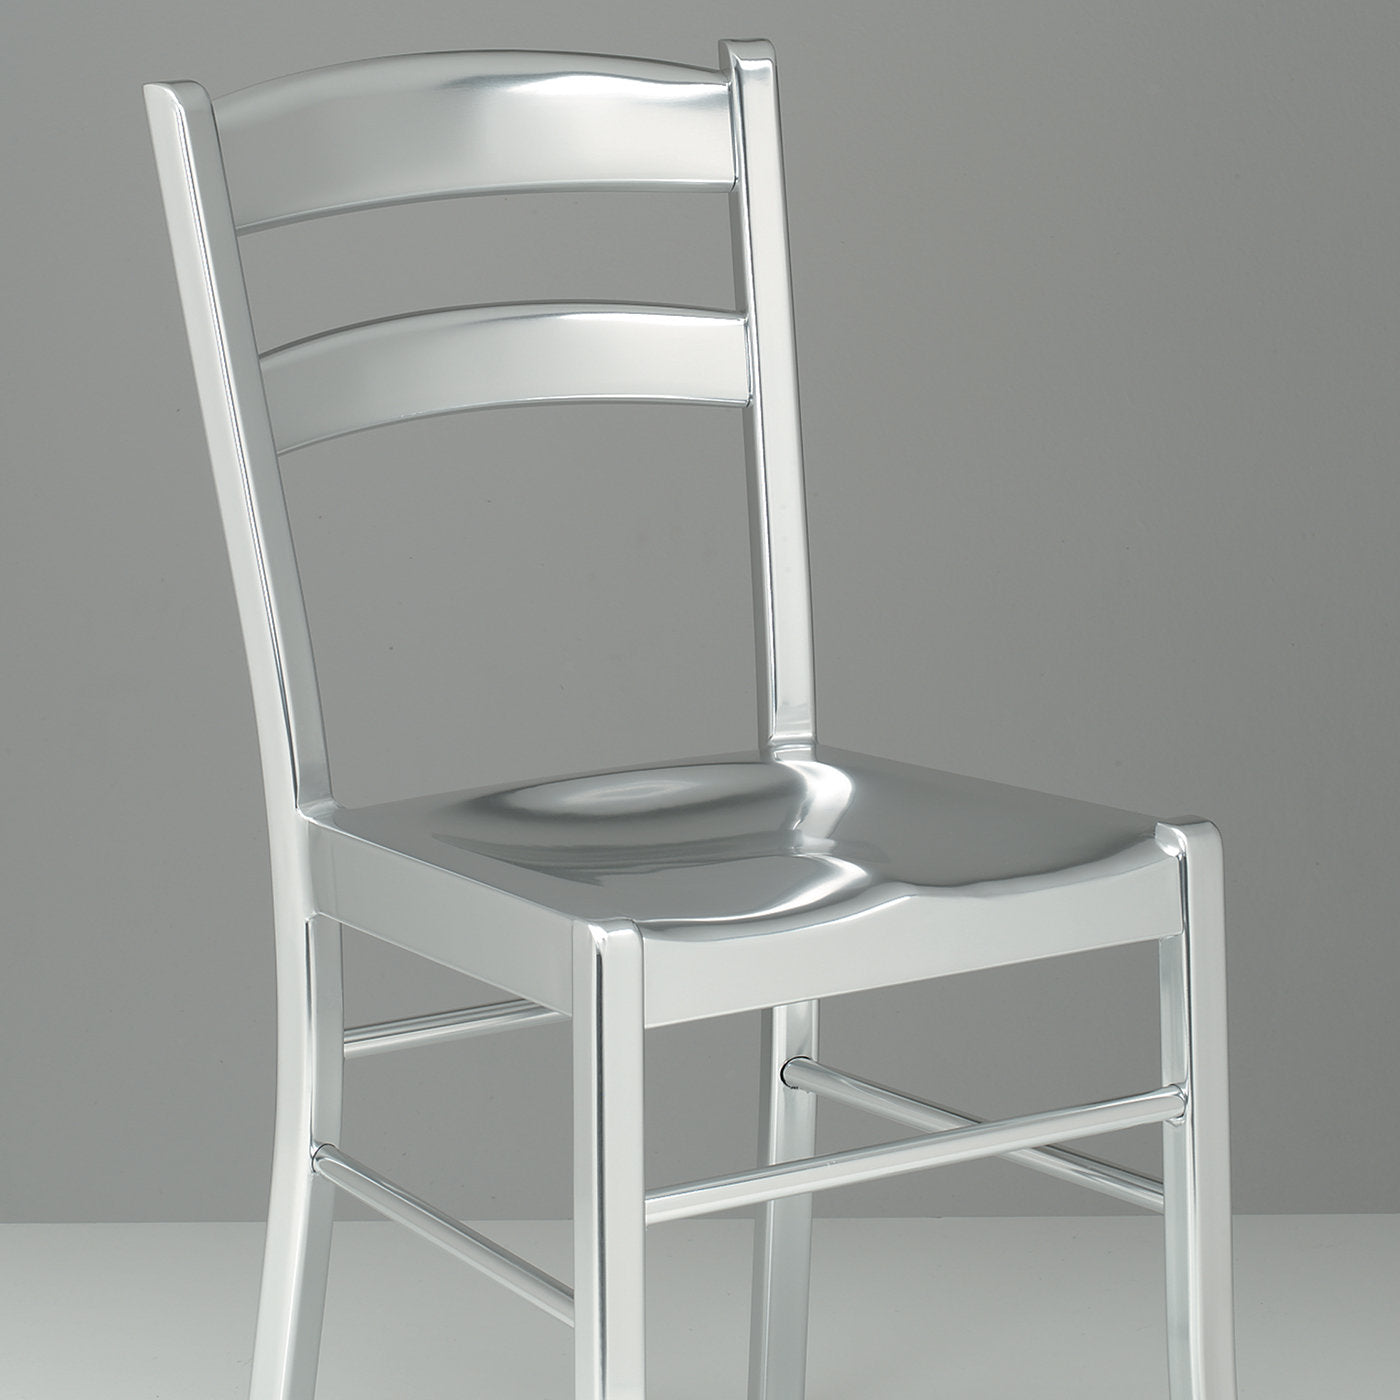 Kore Chair by Vittorio Baggi - Alternative view 2